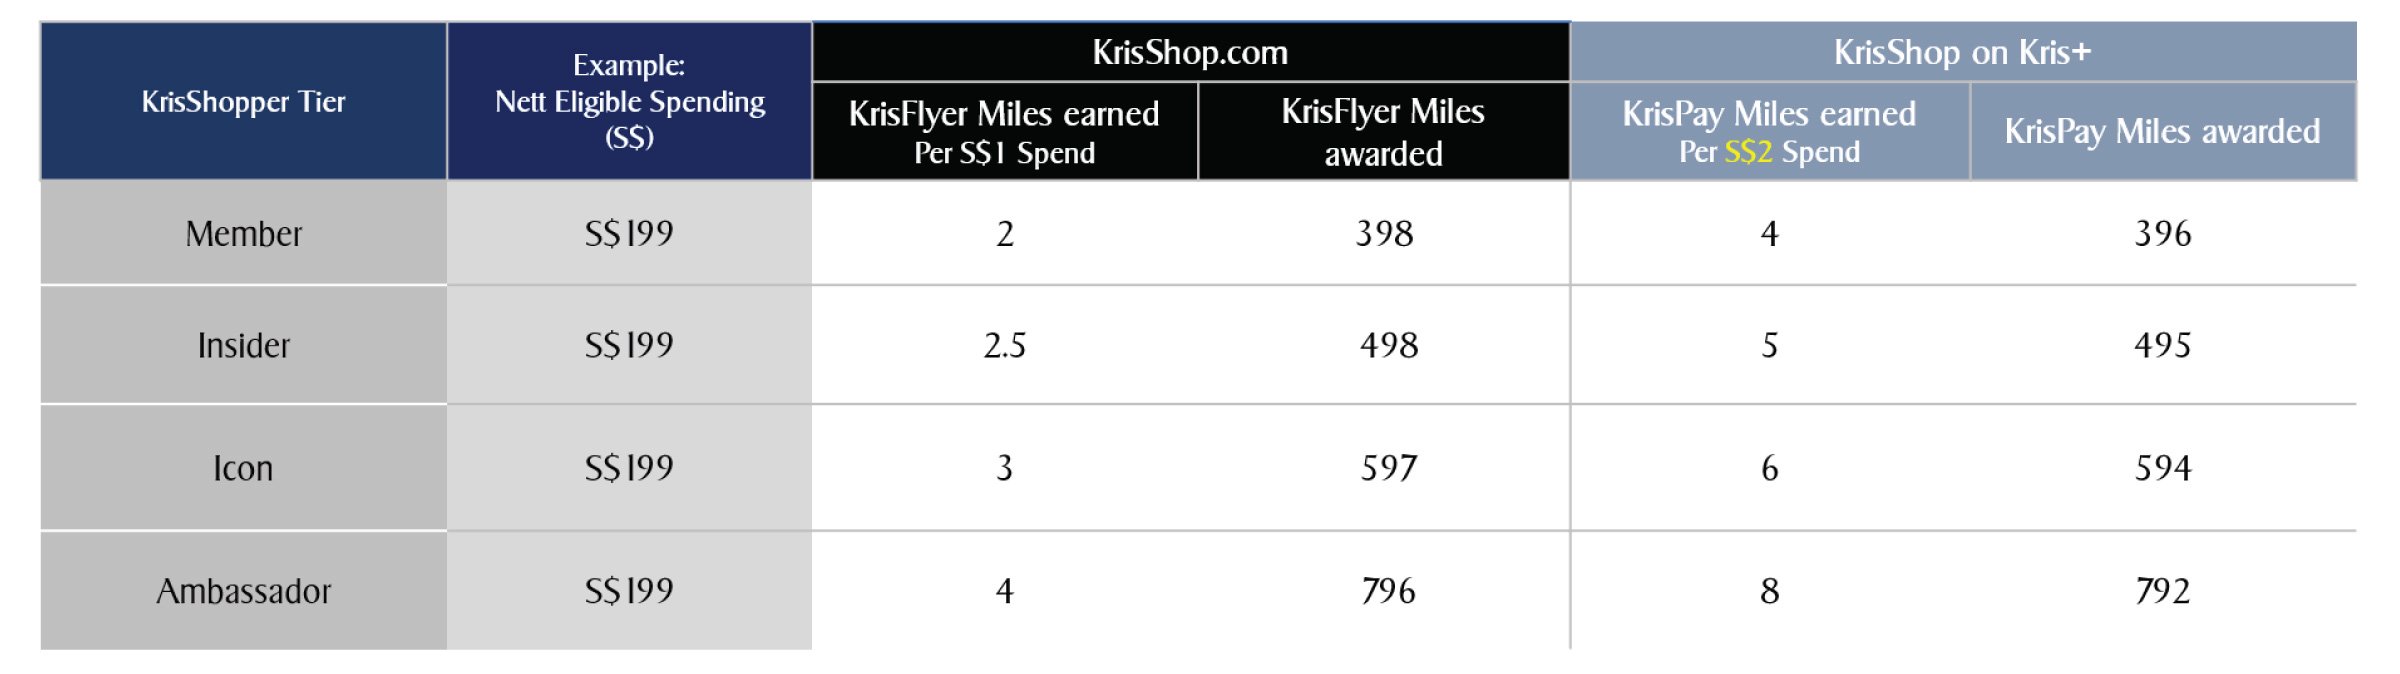 KrisShopper's Example of Miles